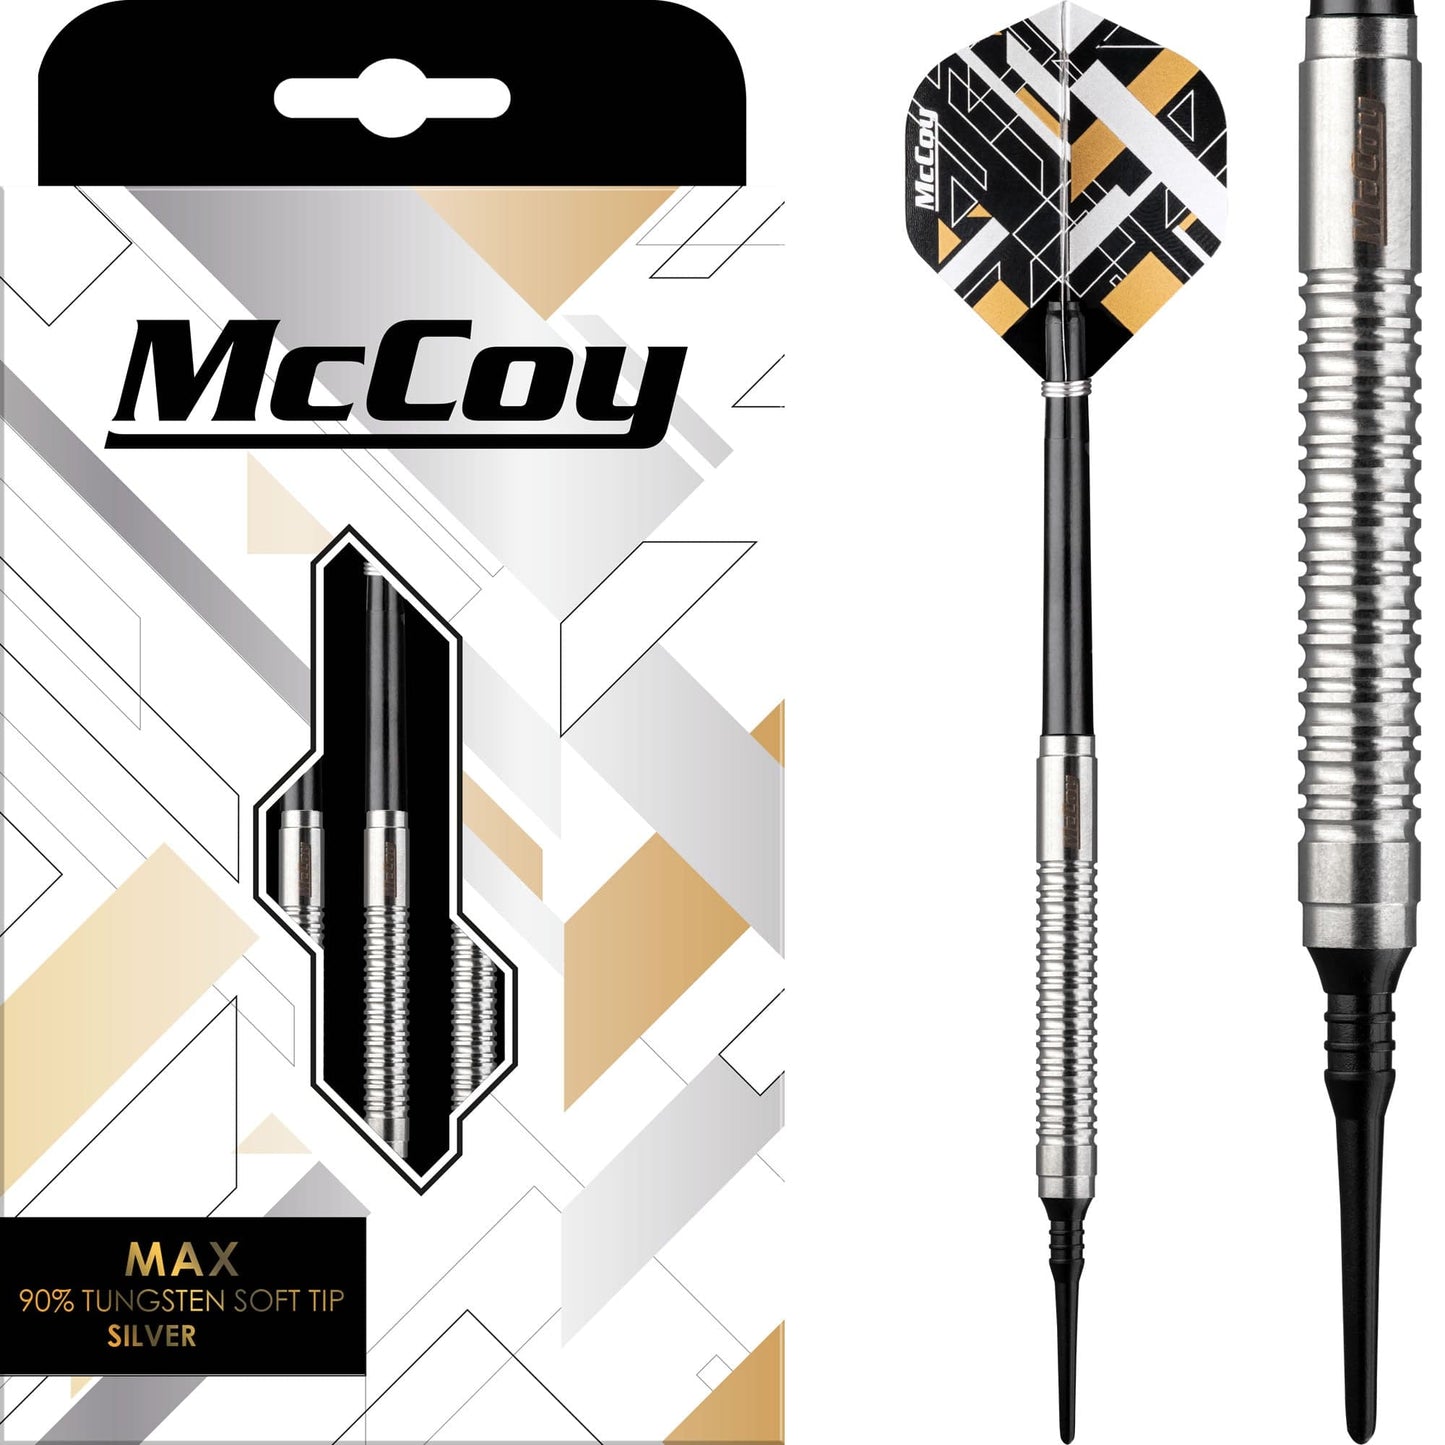 McCoy MAX - 90% Soft Tip Tungsten - Silver 18g